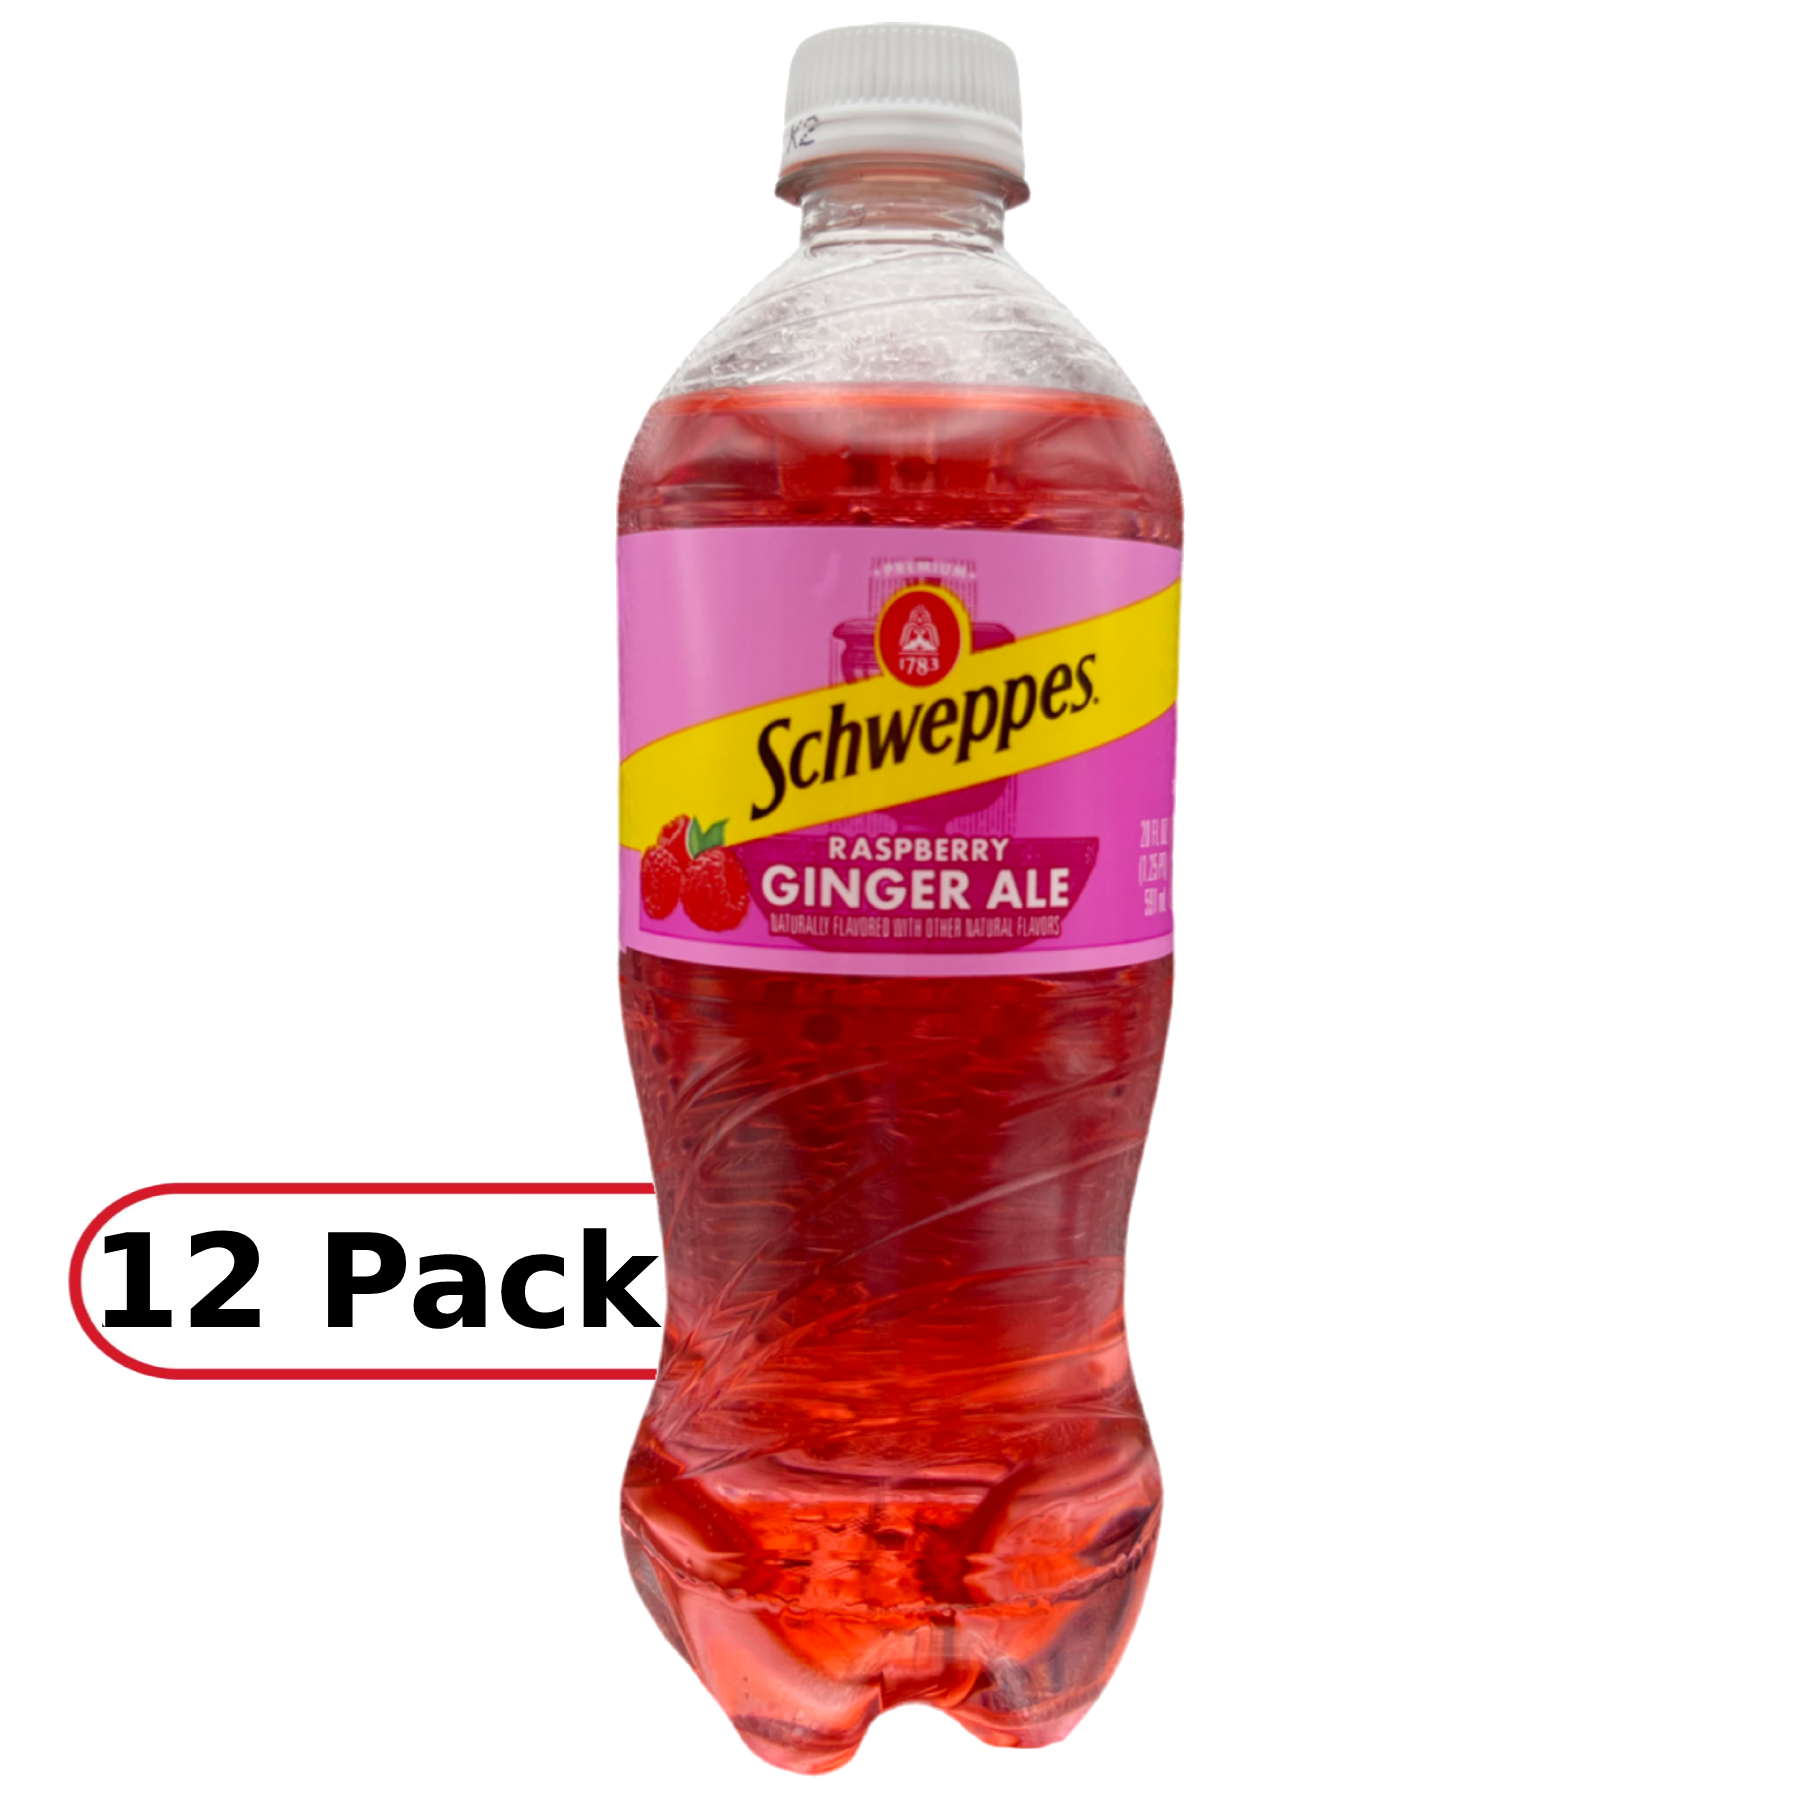 Schweppes Raspberry Ginger Ale, 20 Fl Oz Bottles, 12 Pack - image 1 of 1